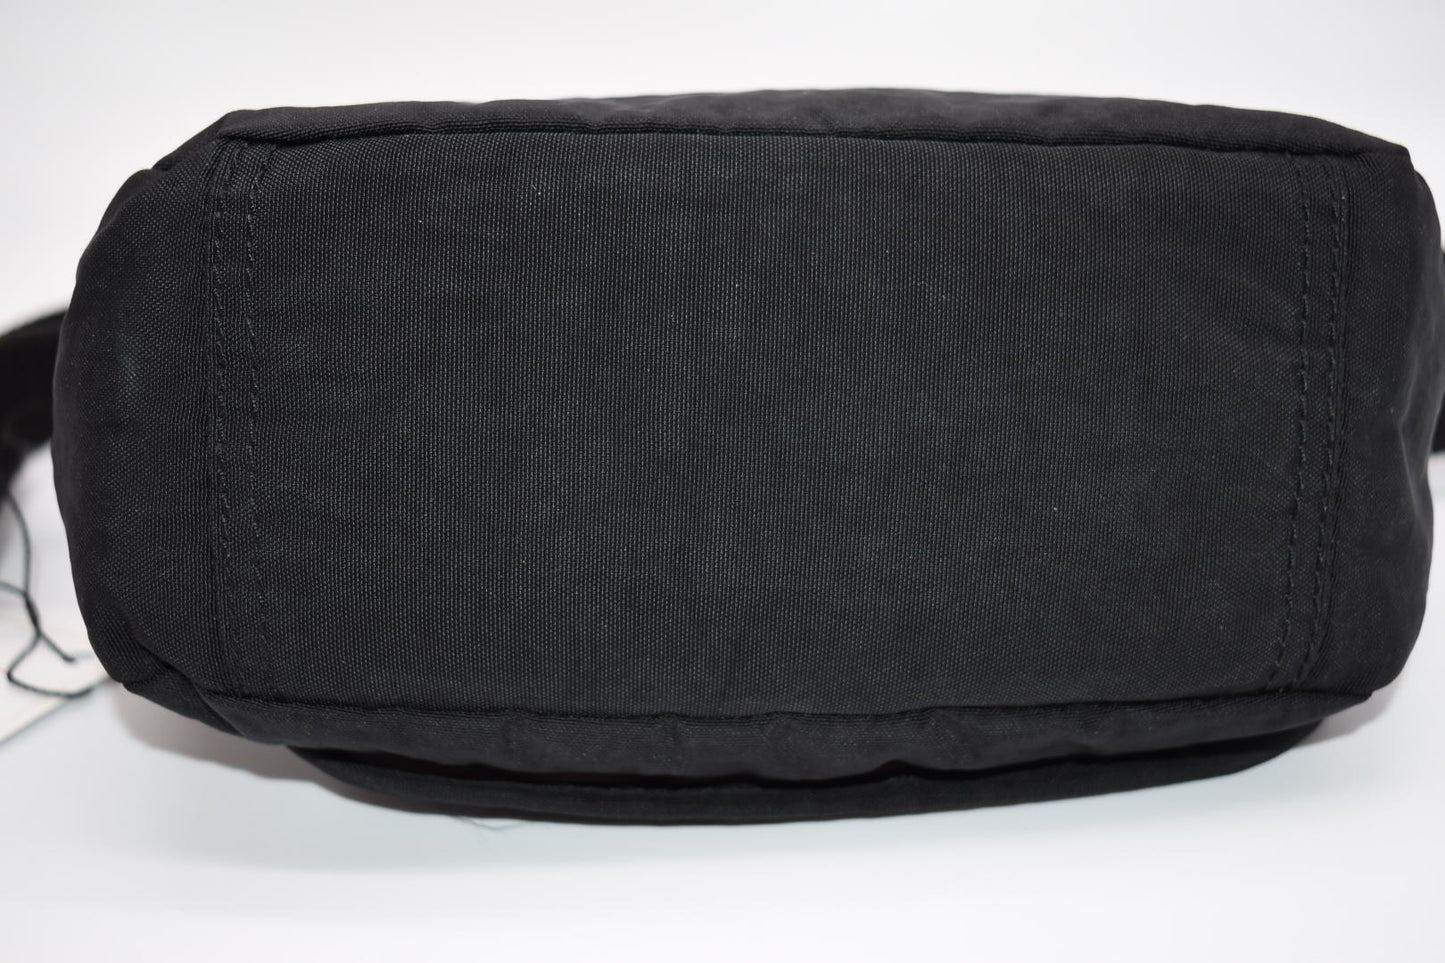 Kipling Sabian Mini Crossbody Bag in Black